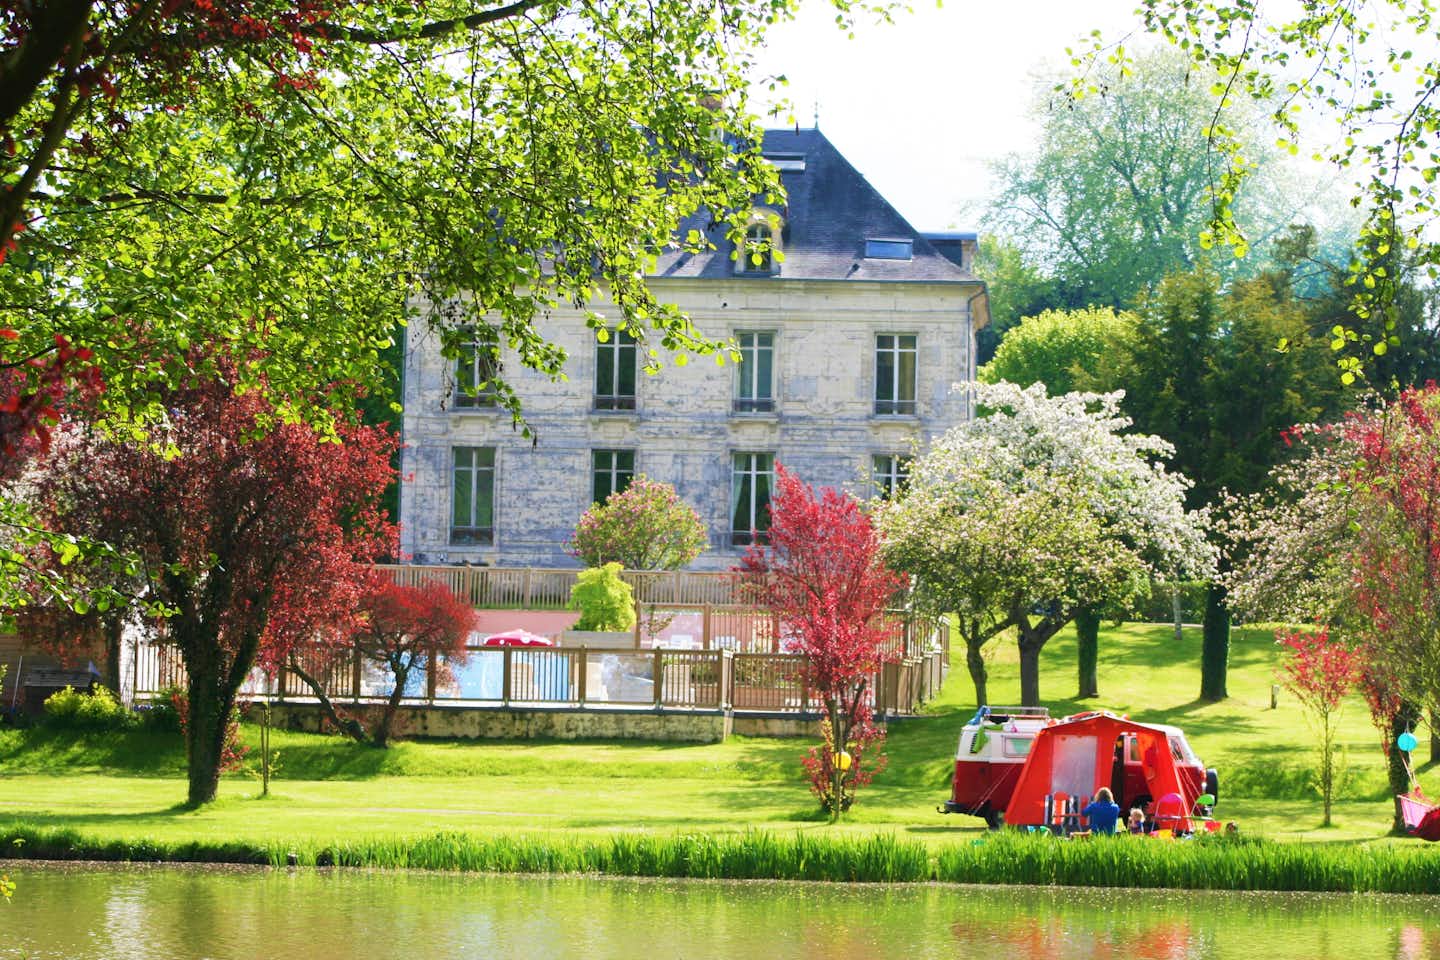 Camping Le Brévedent - Stellplätze im Park des Chateau du Brevedent in der Normandie